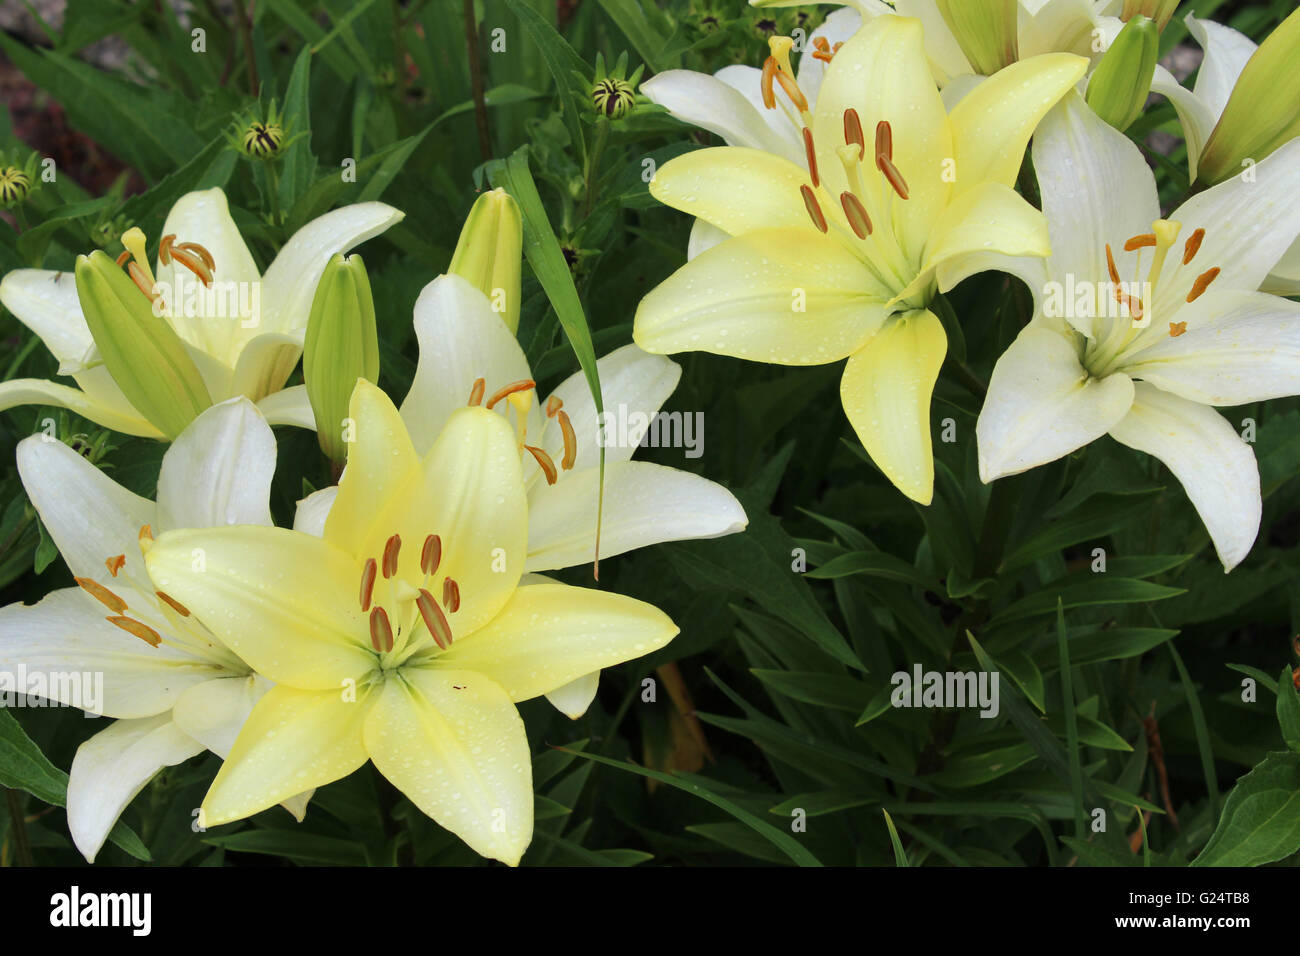 Un daylily è una pianta flowering in genere Hemerocallis. Foto Stock